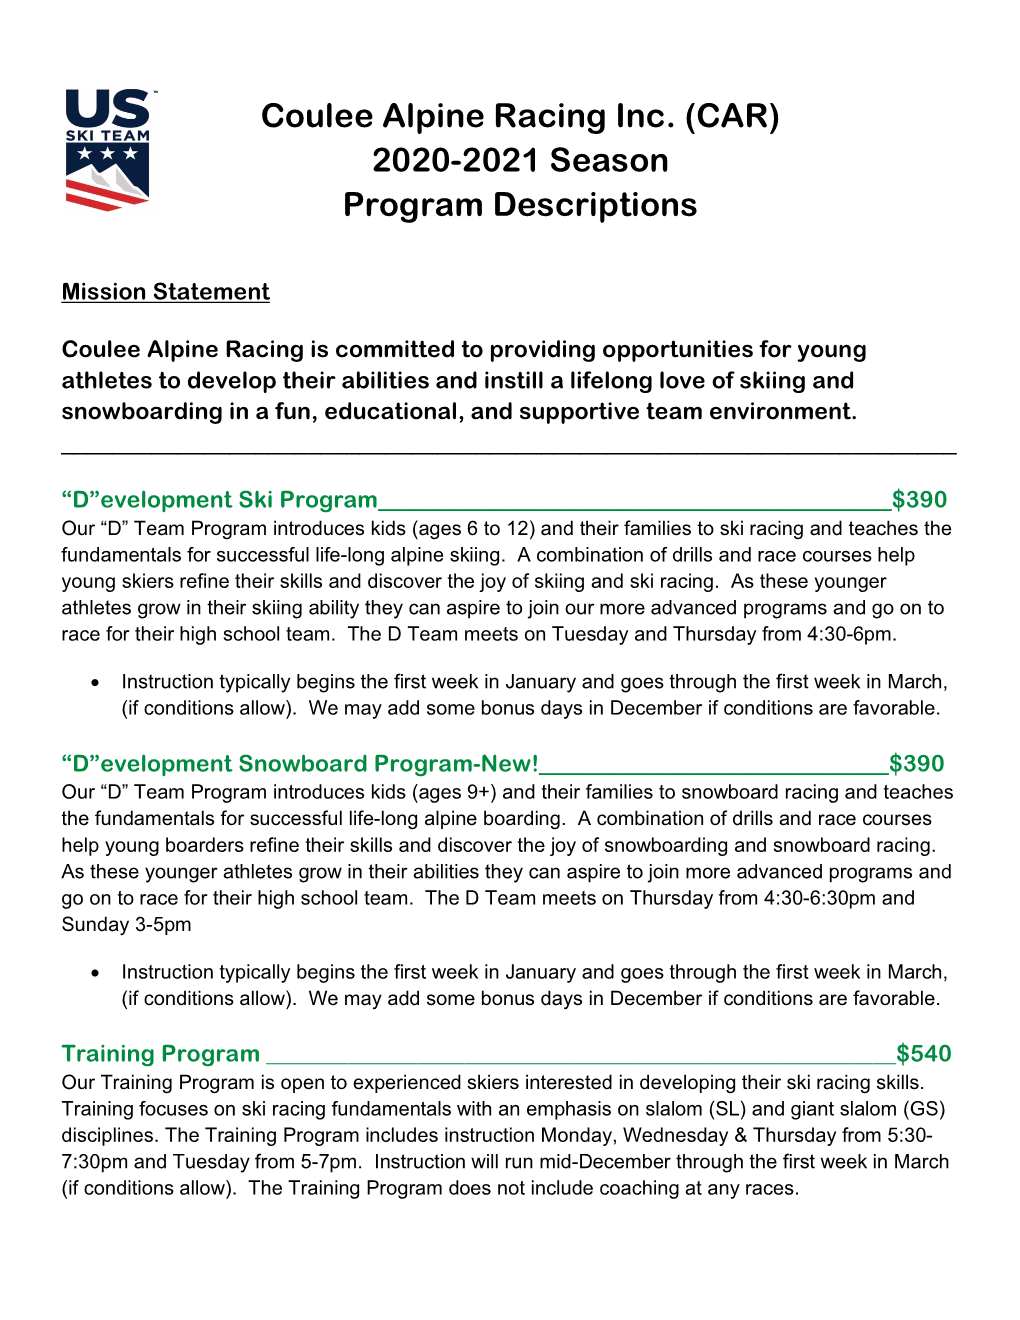 Coulee Alpine Racing Inc. (CAR) 2020-2021 Season Program Descriptions